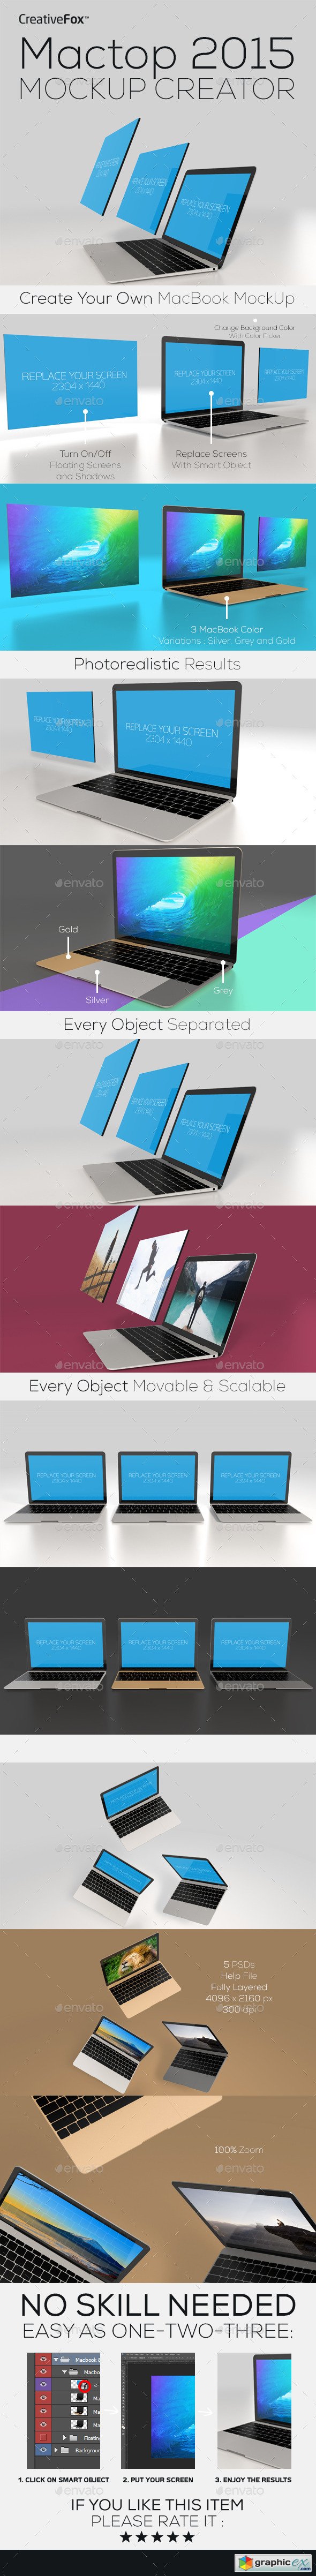 Mactop 2015 Mockup Creator - Laptop Mockup